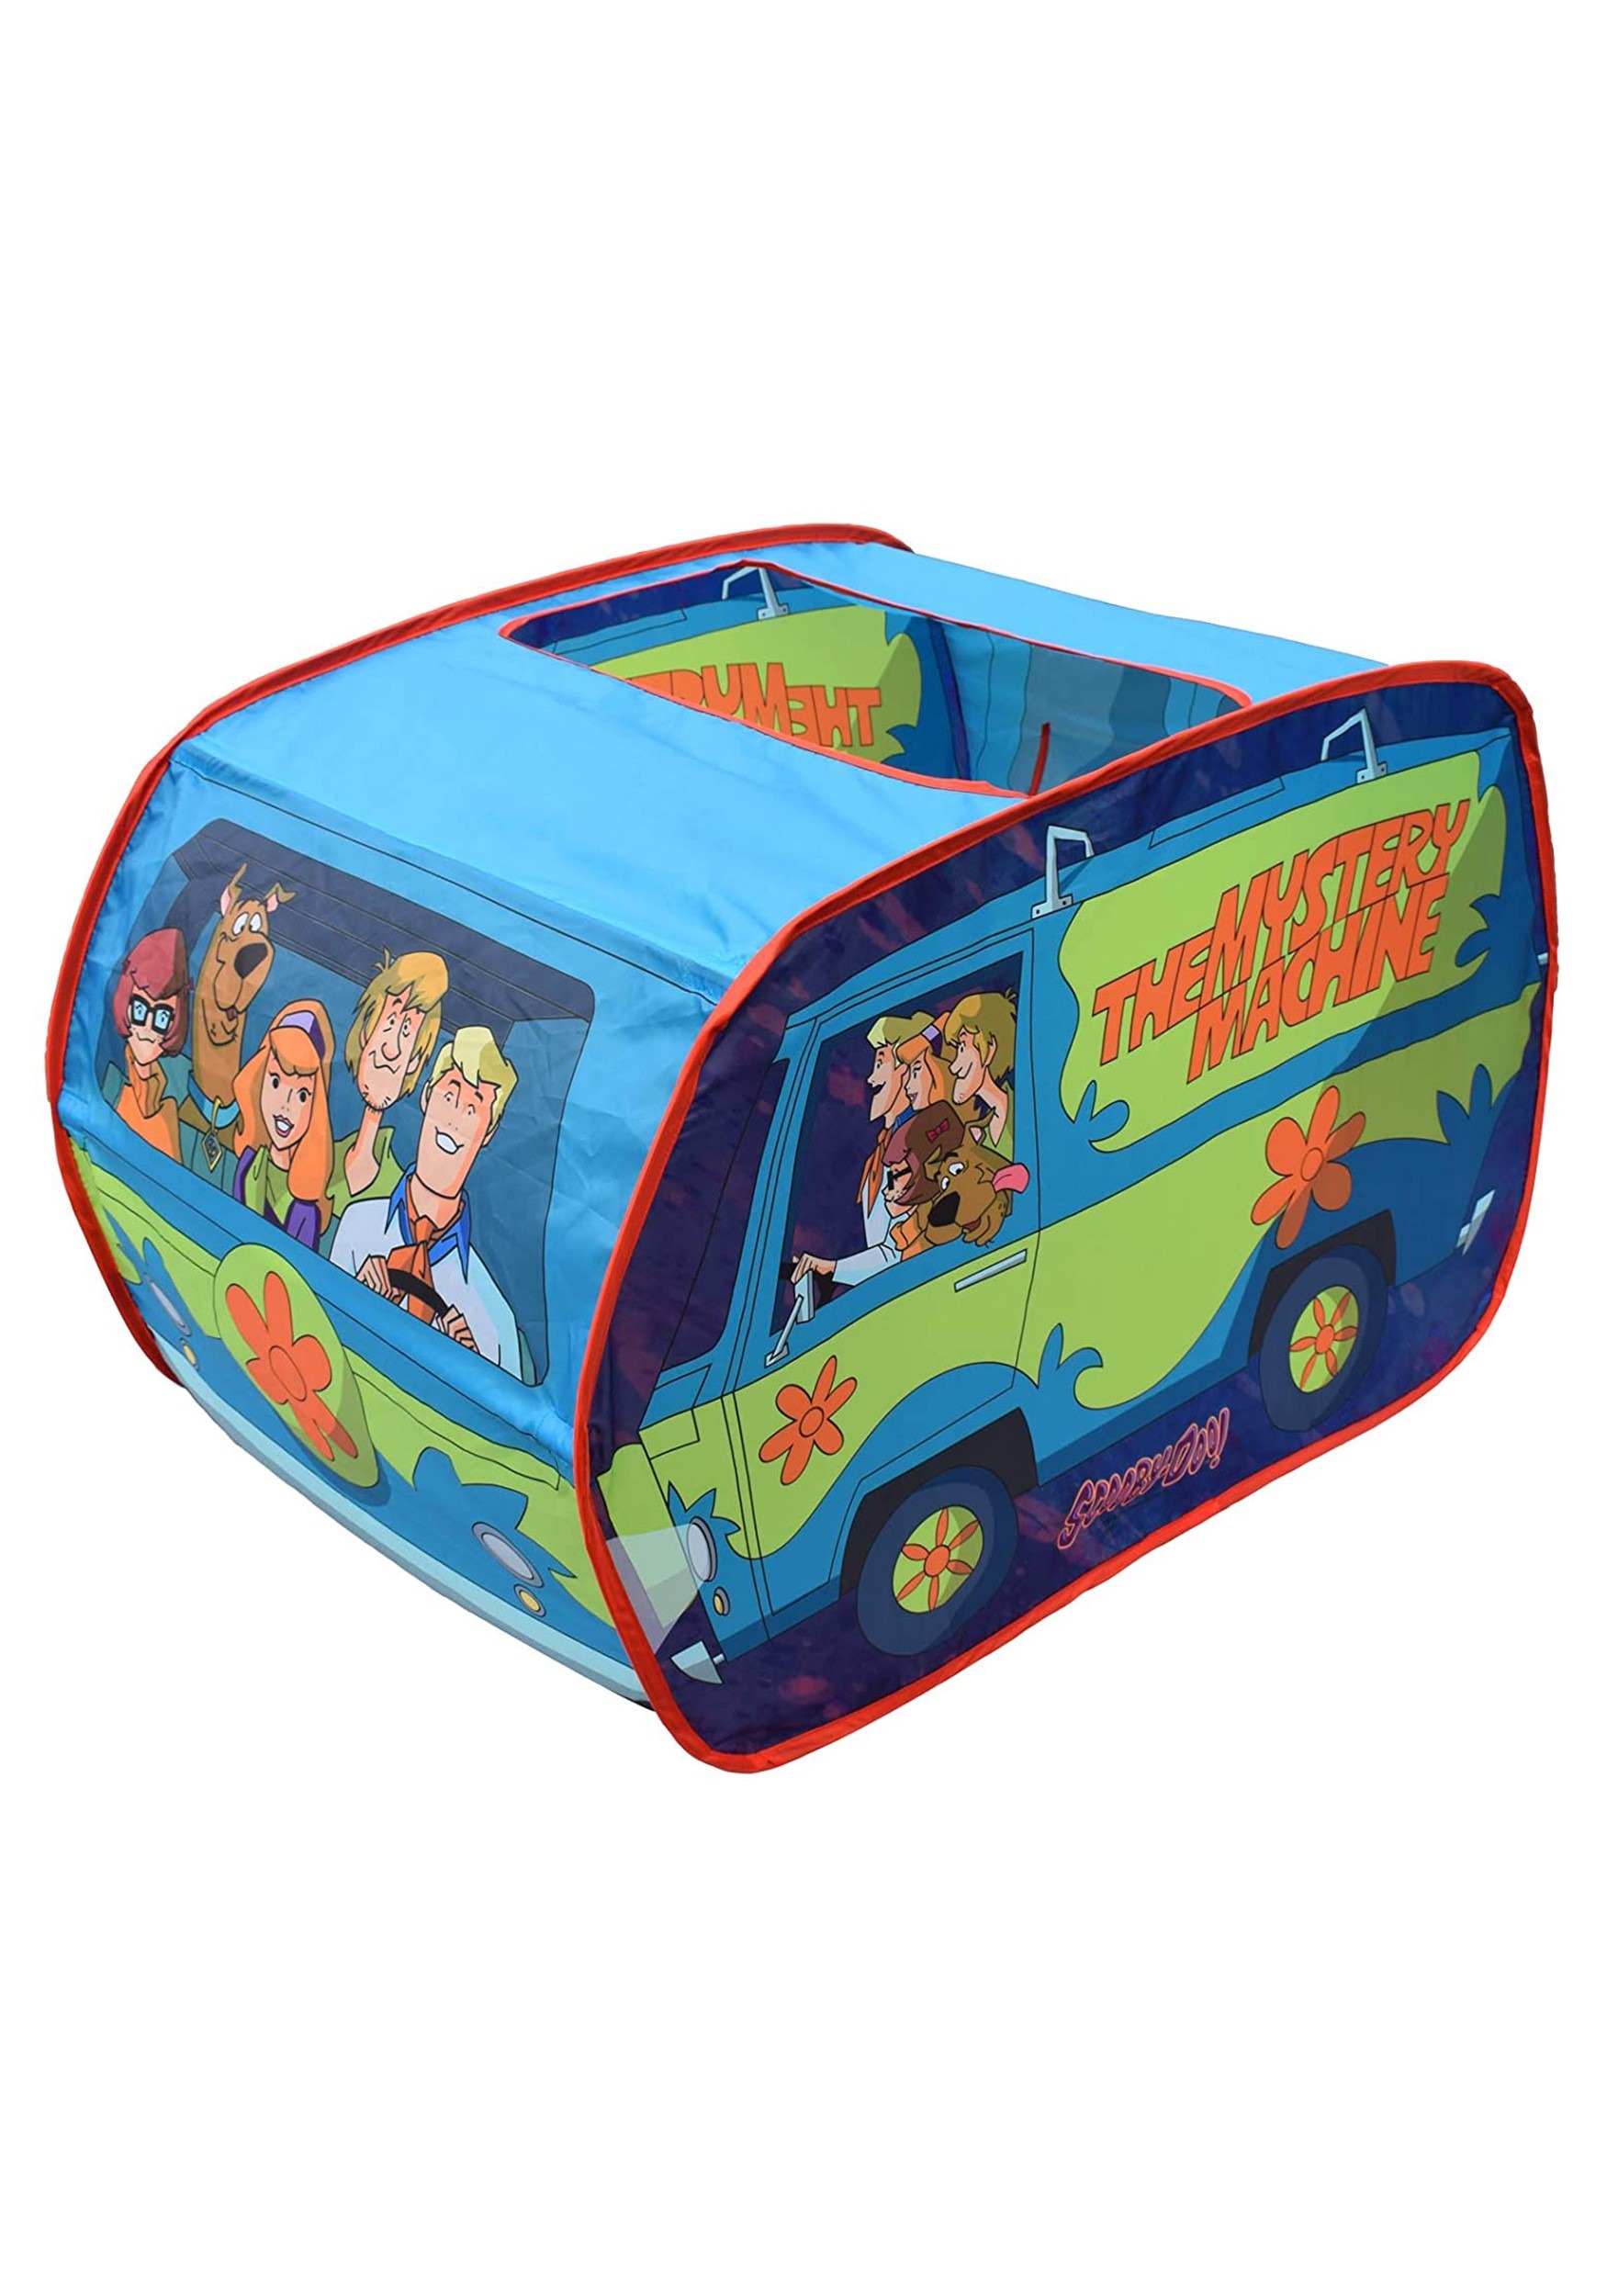 Scooby Doo Mystery Machine Tent